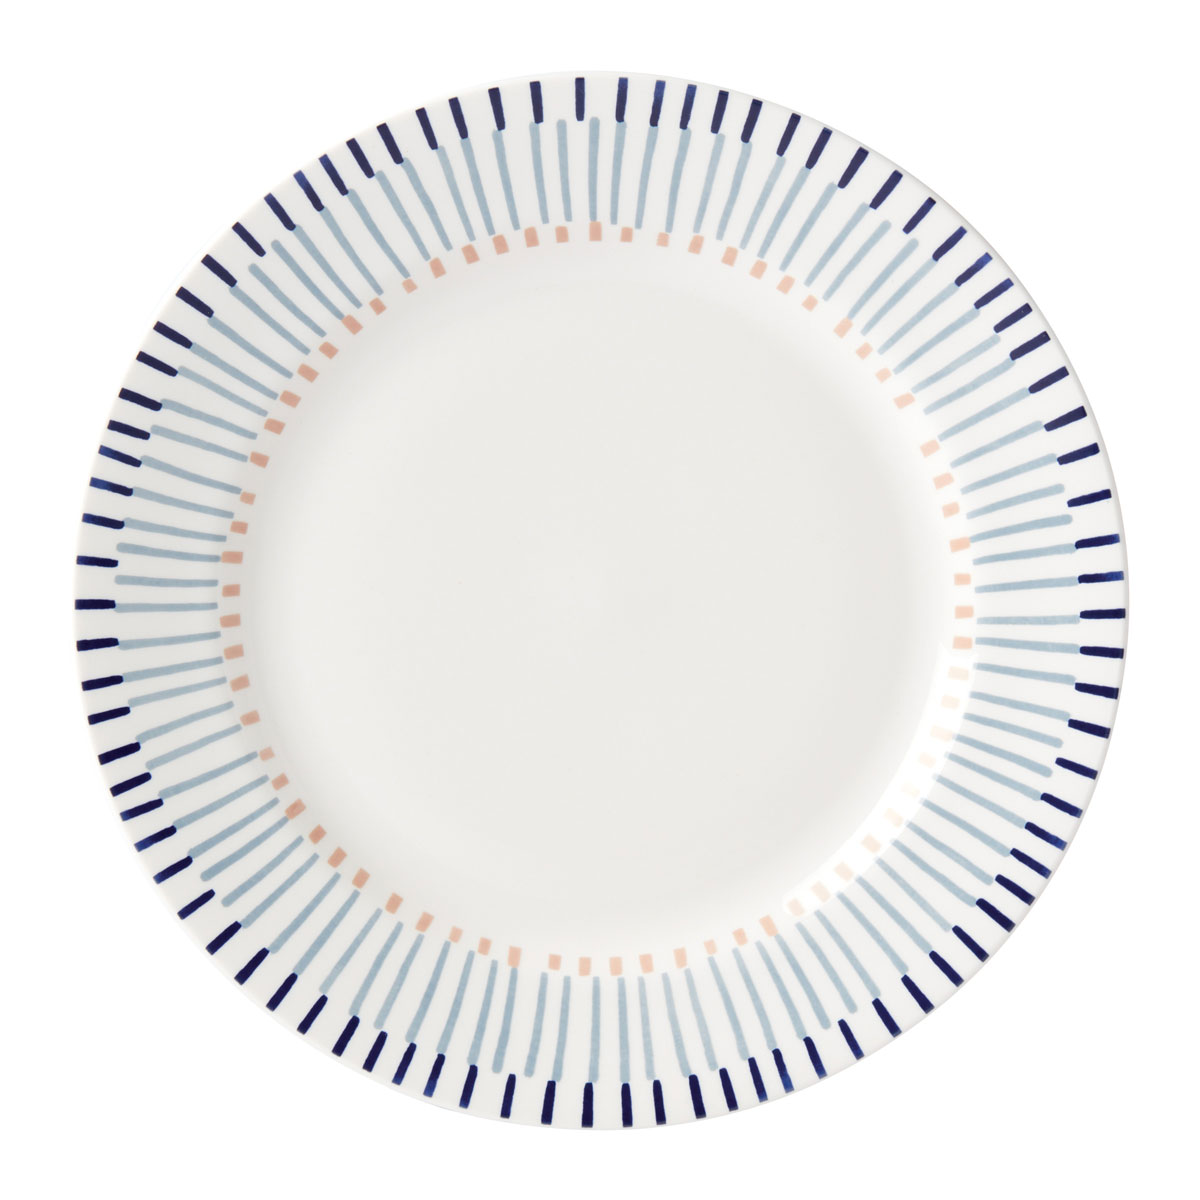 Kate Spade China by Lenox, Brook Lane Dinner Plate